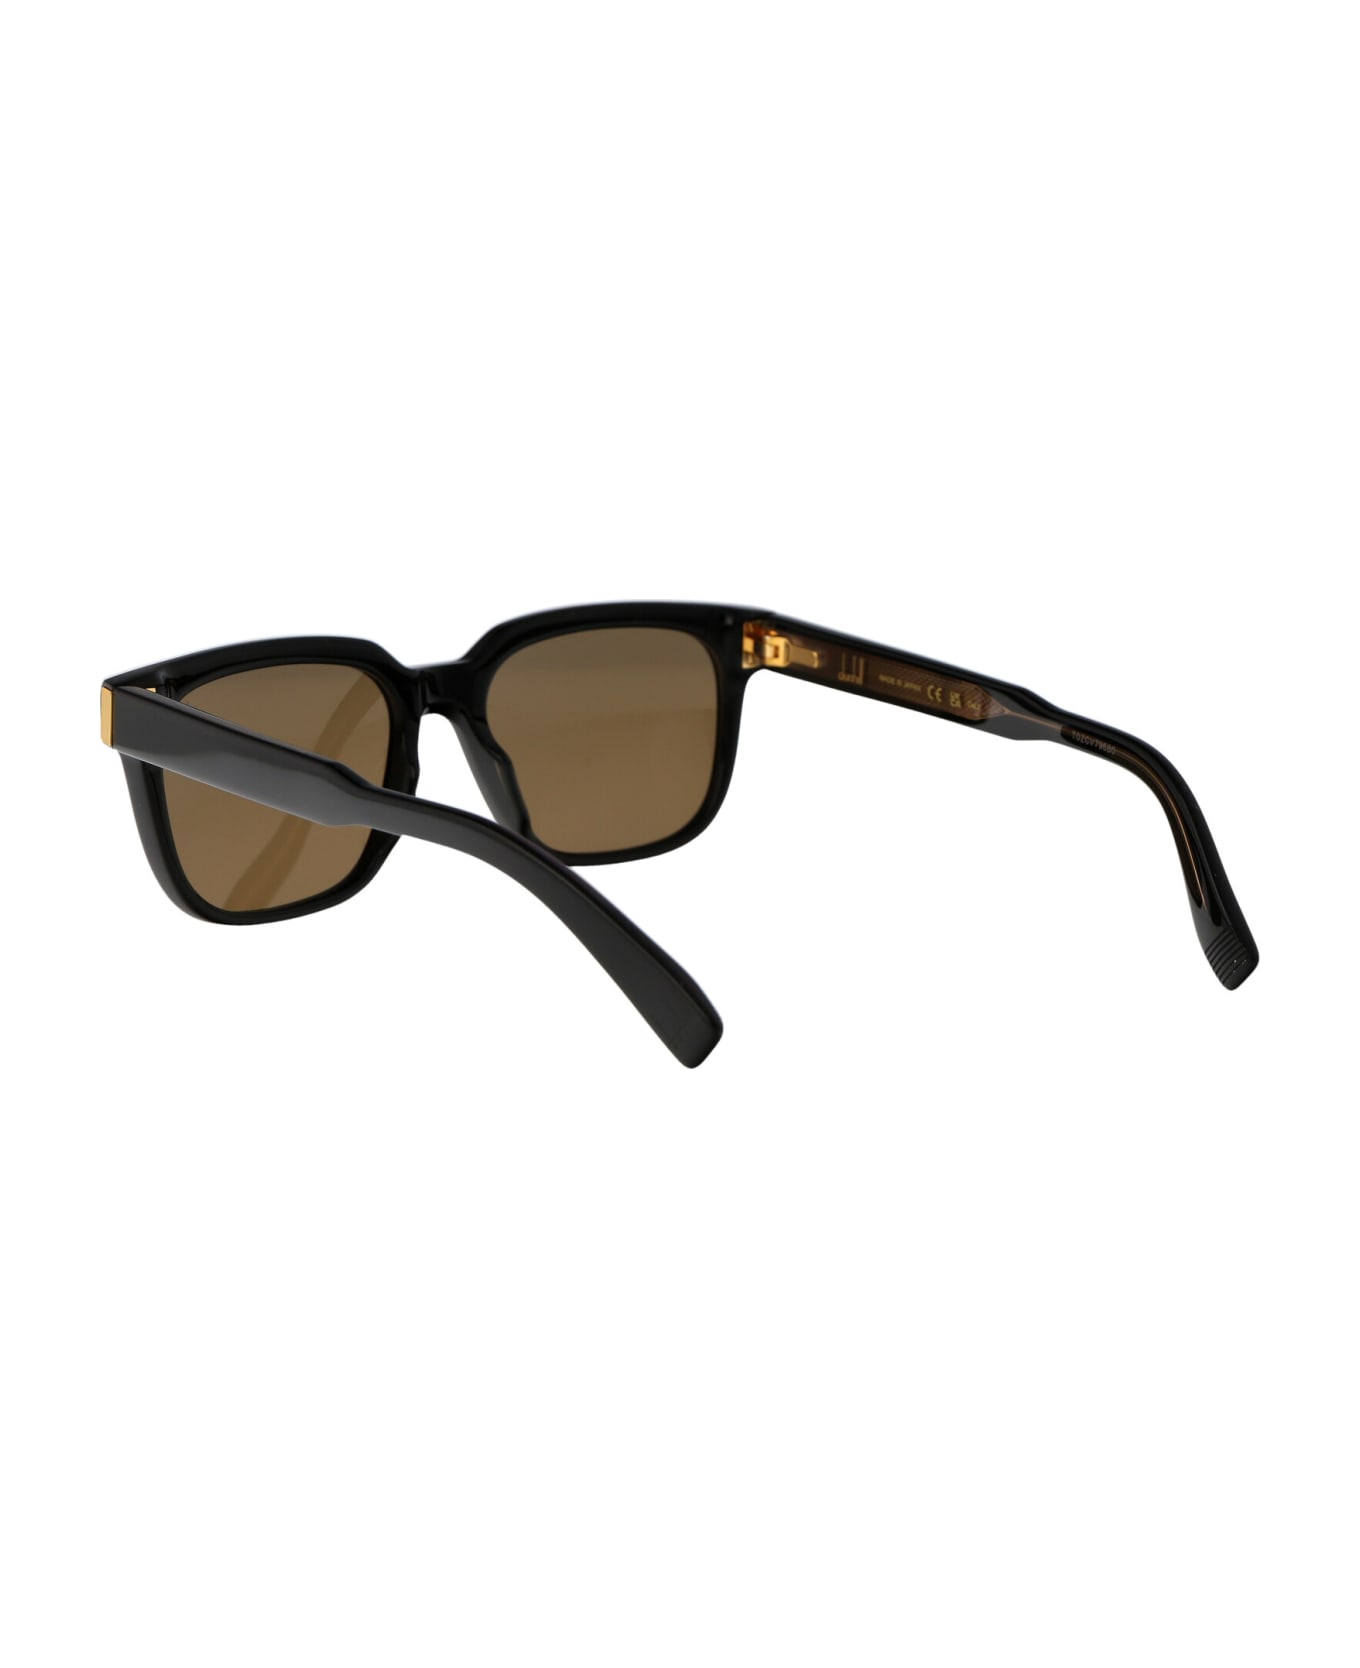 Dunhill Du0002s Sunglasses - 001 BLACK BLACK BROWN